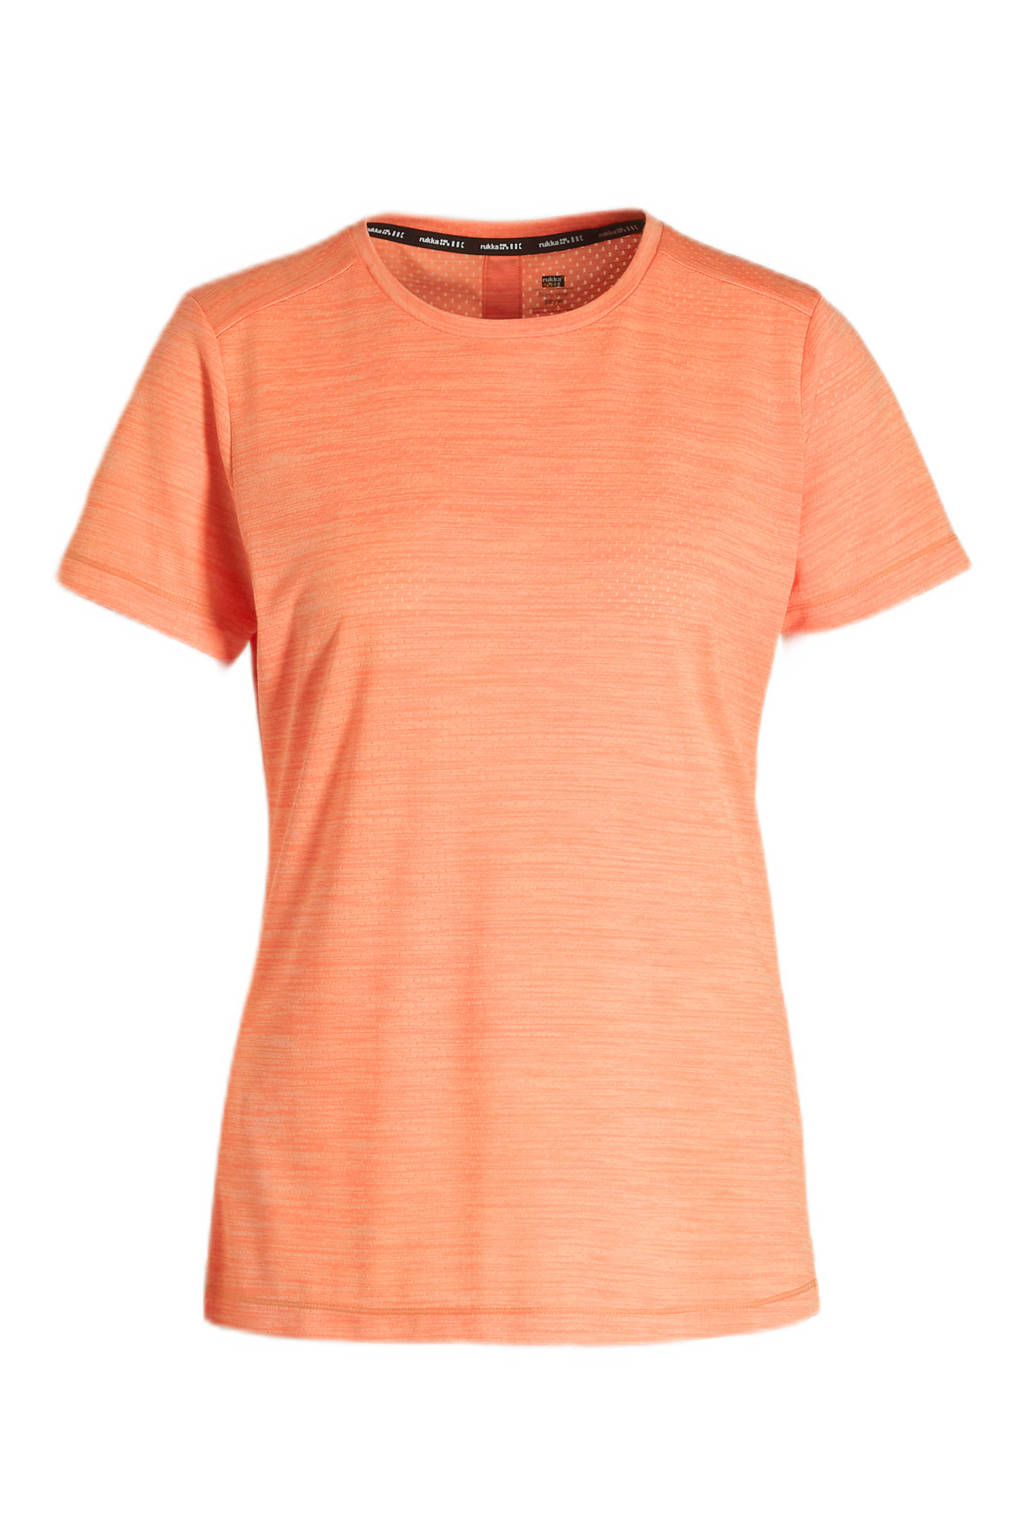 Oranje dames Rukka sport T-shirt Ylikartti van polyester met korte mouwen en ronde hals